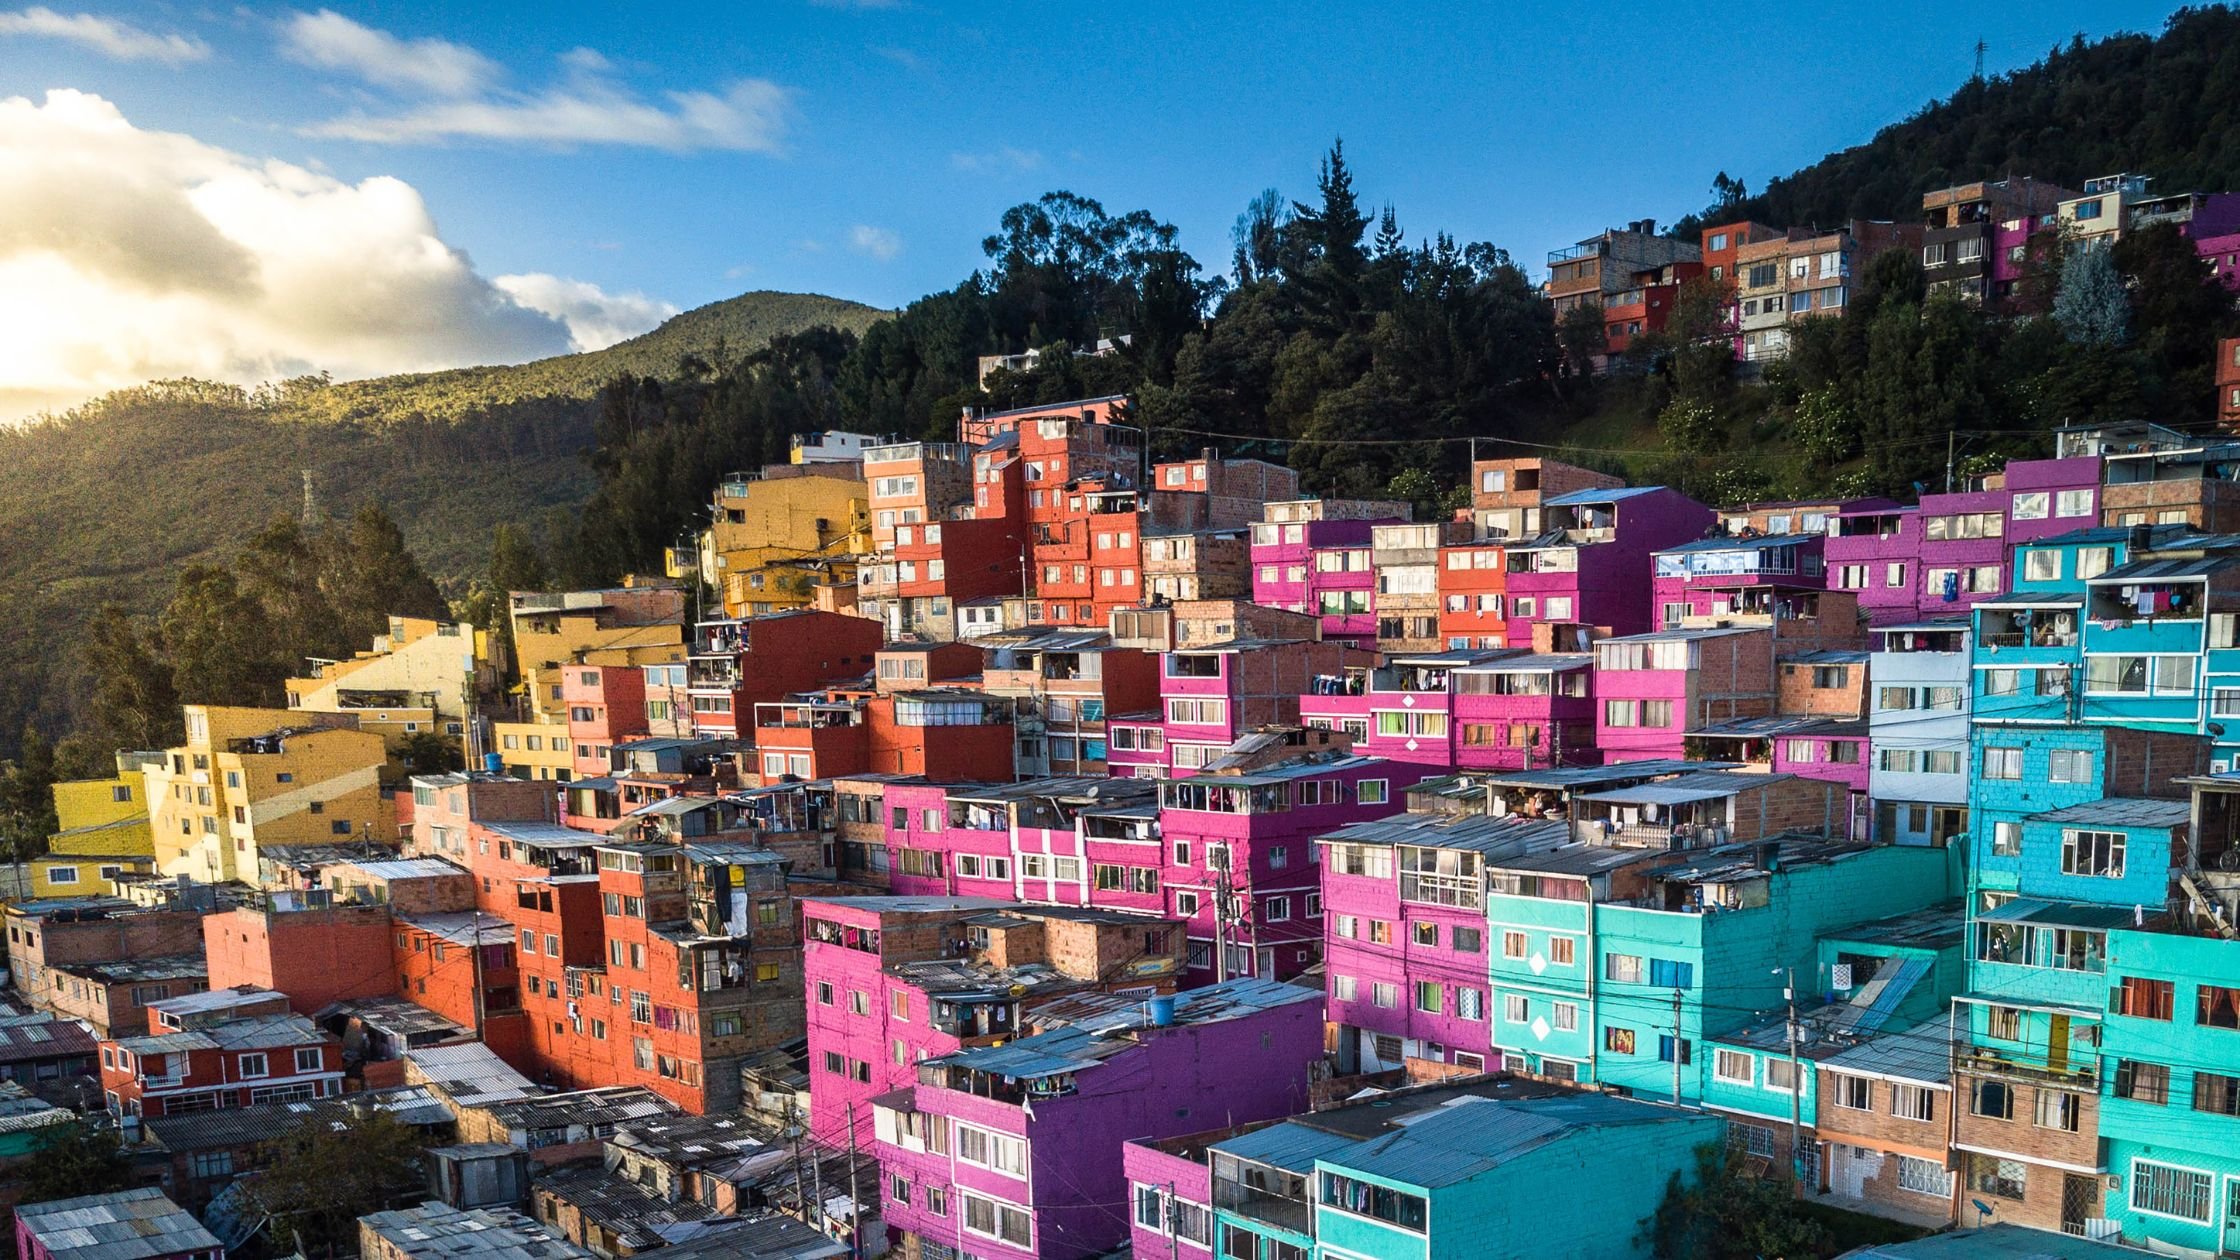 Communities of Medellin, Colombia